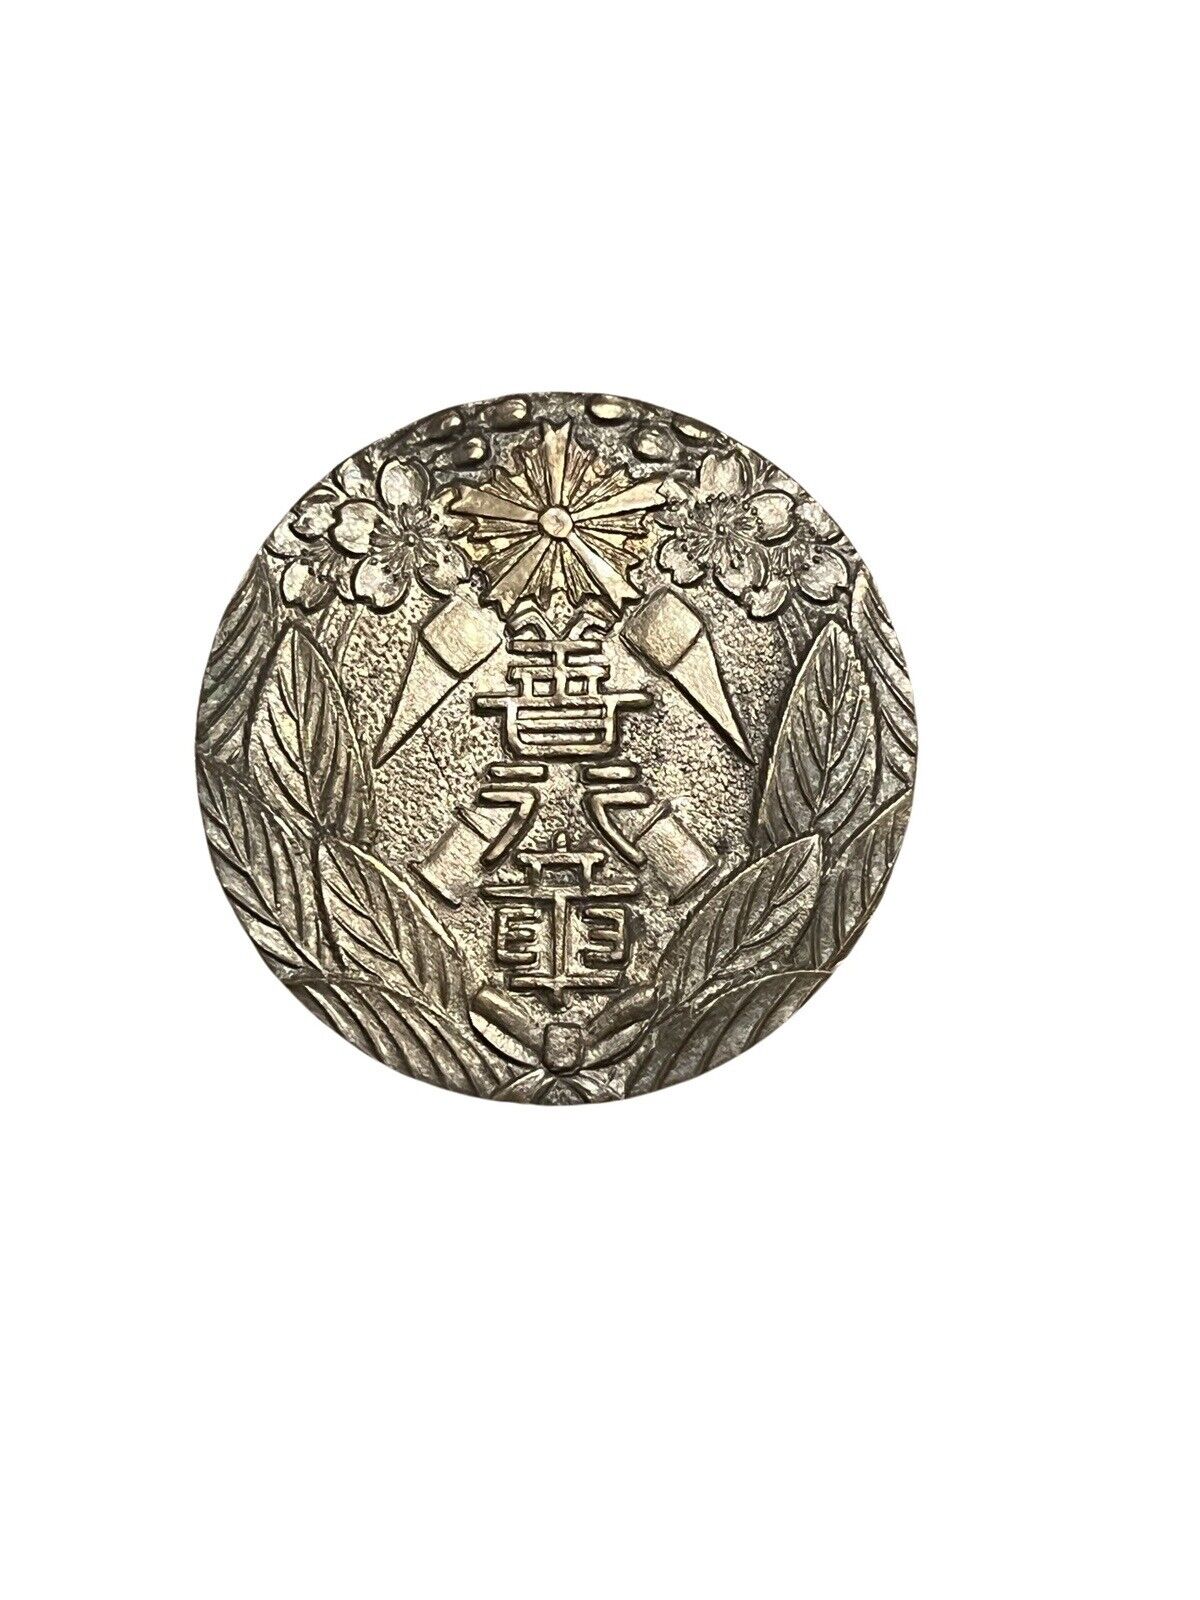 Vintage Japanese Fire Brigade Award Badge Firefighter Fireman Medal